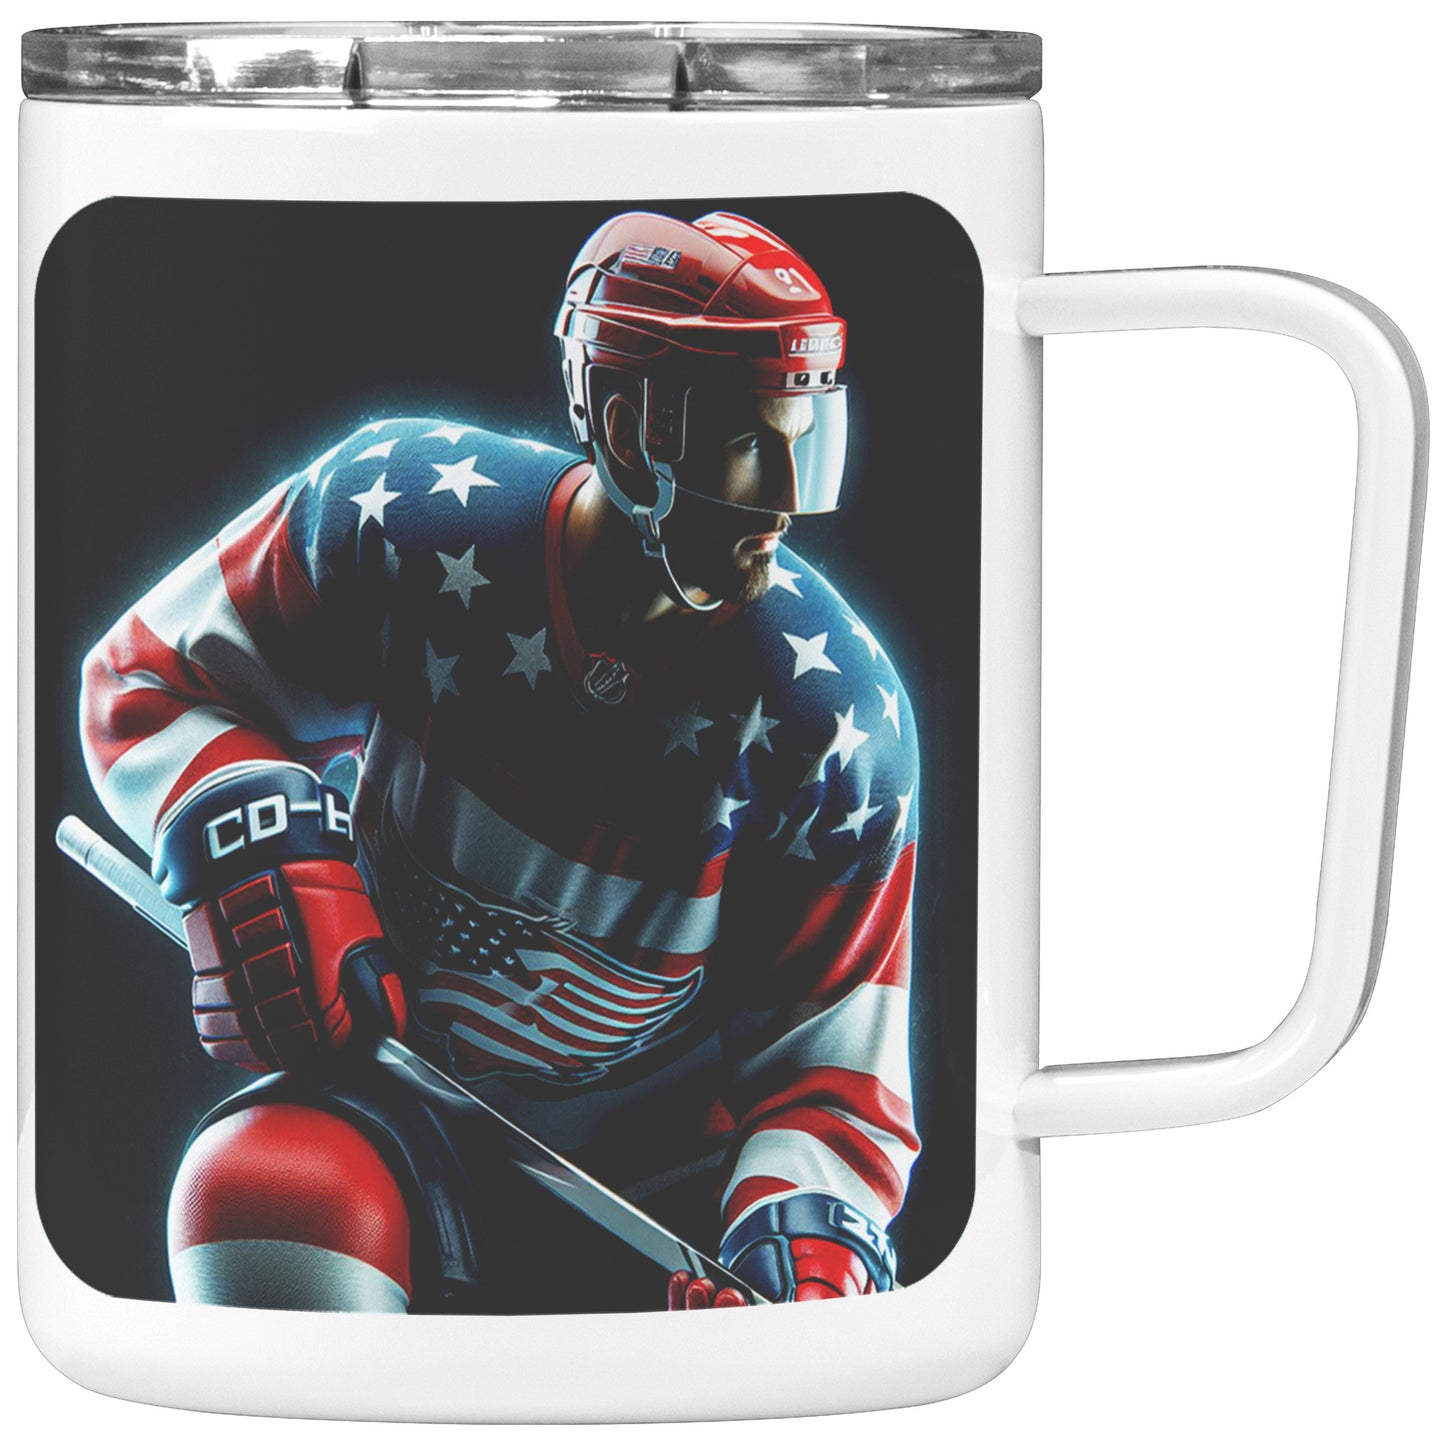 Man Ice Hockey Player - Coffee Mug #11